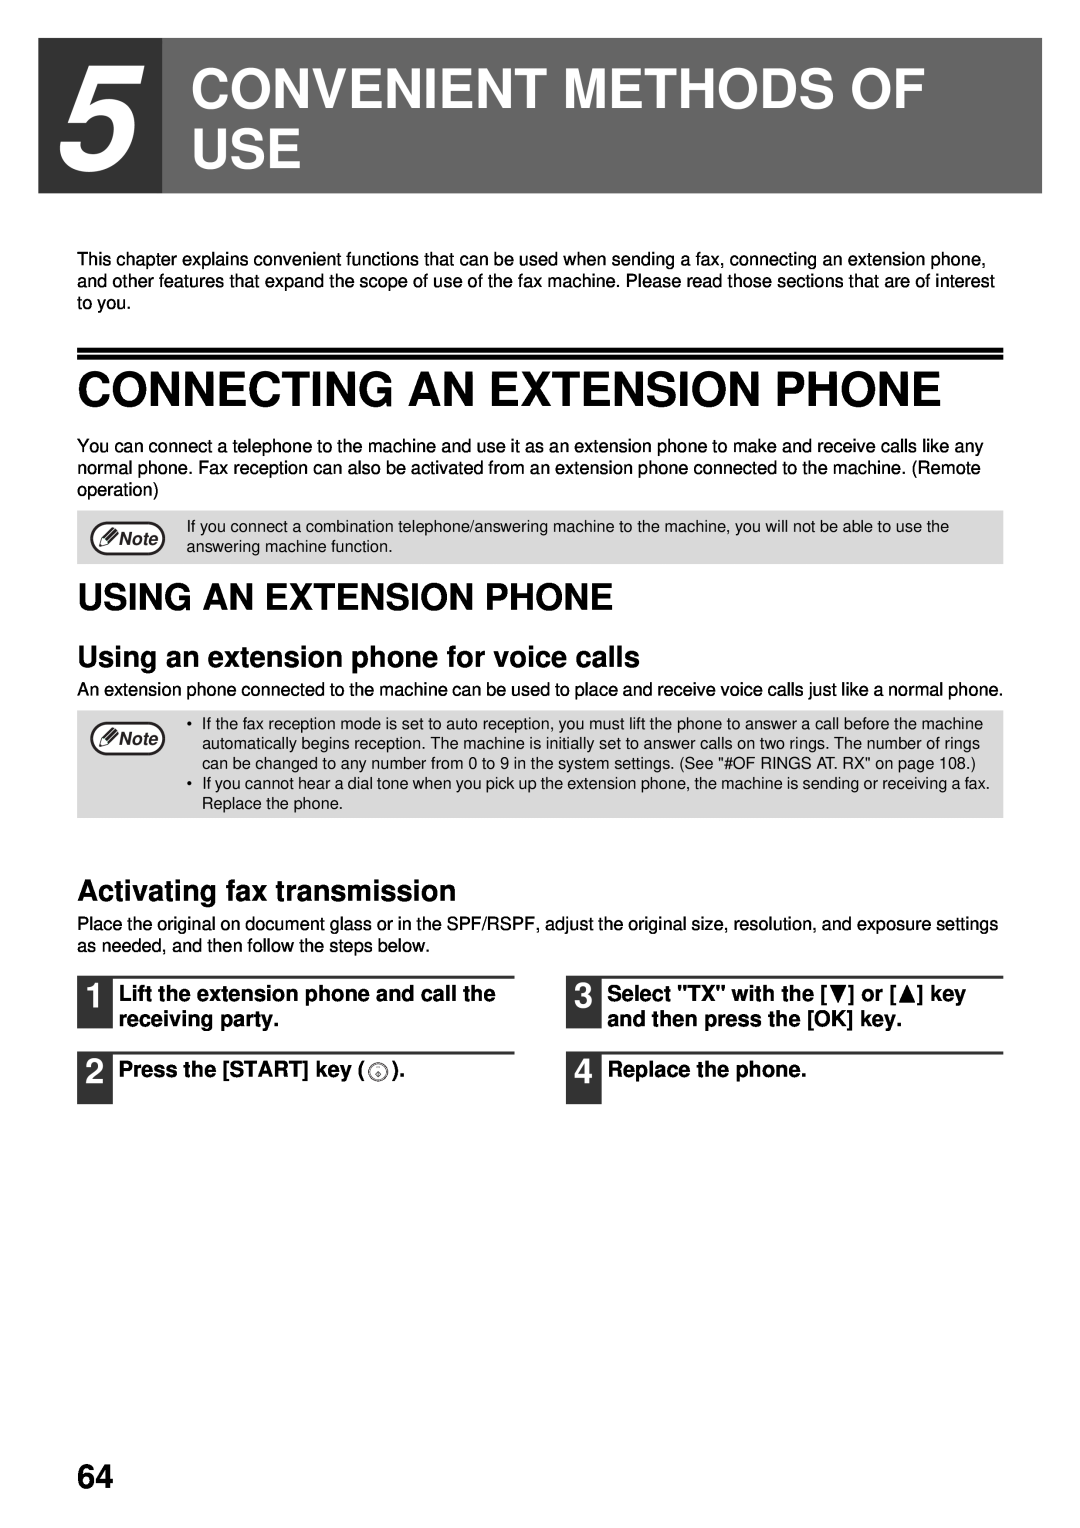 Sharp MX-FX13 appendix Convenient Methods Of Use, Using An Extension Phone, Using an extension phone for voice calls 